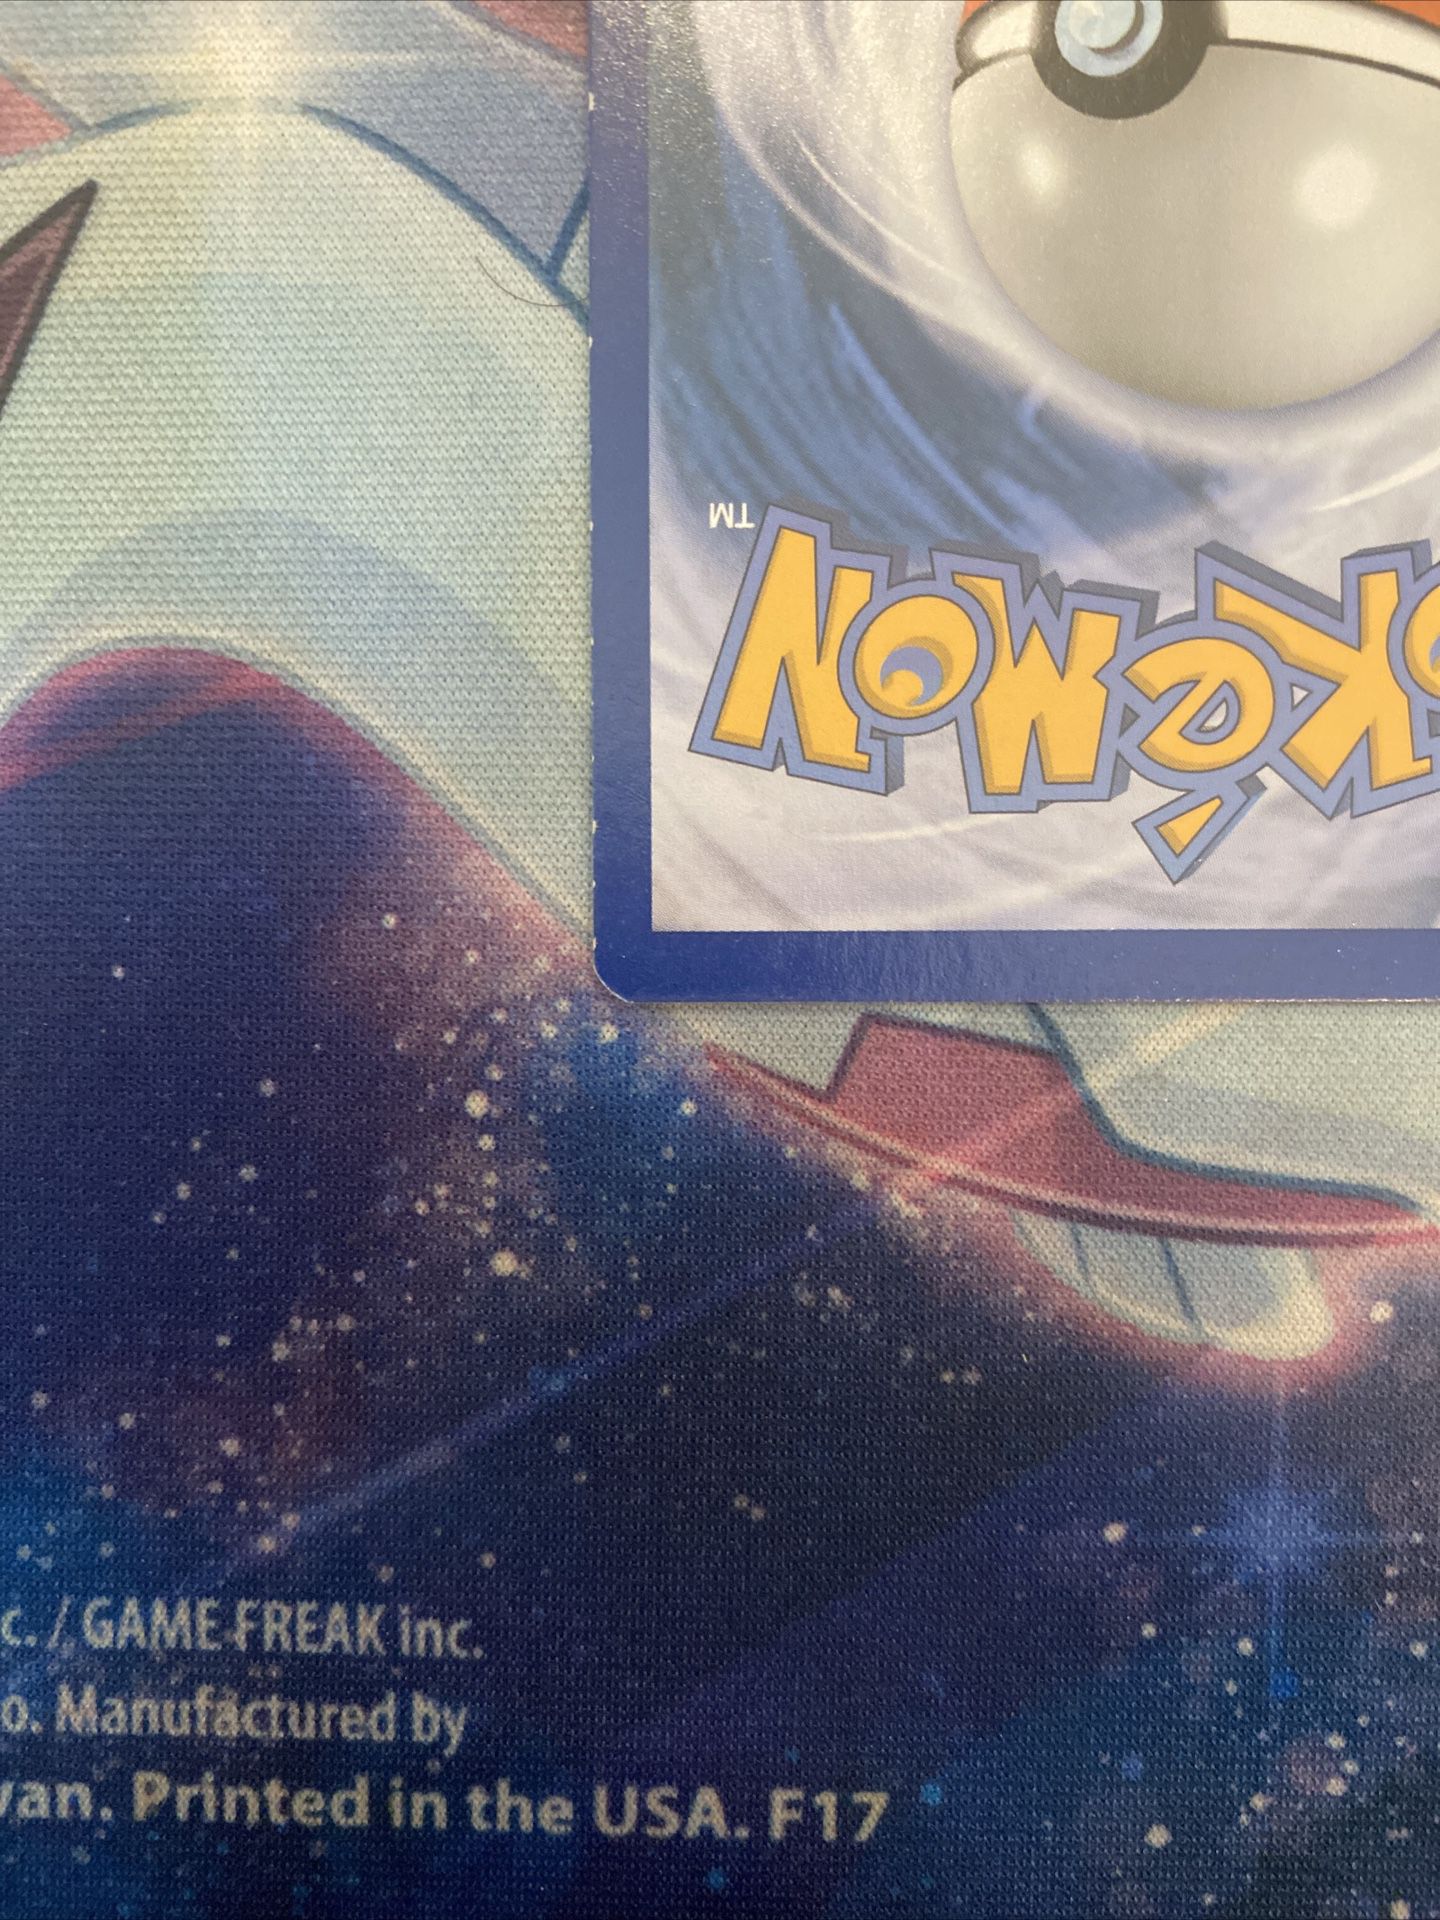 M Gengar EX #35 Prices, Pokemon Phantom Forces